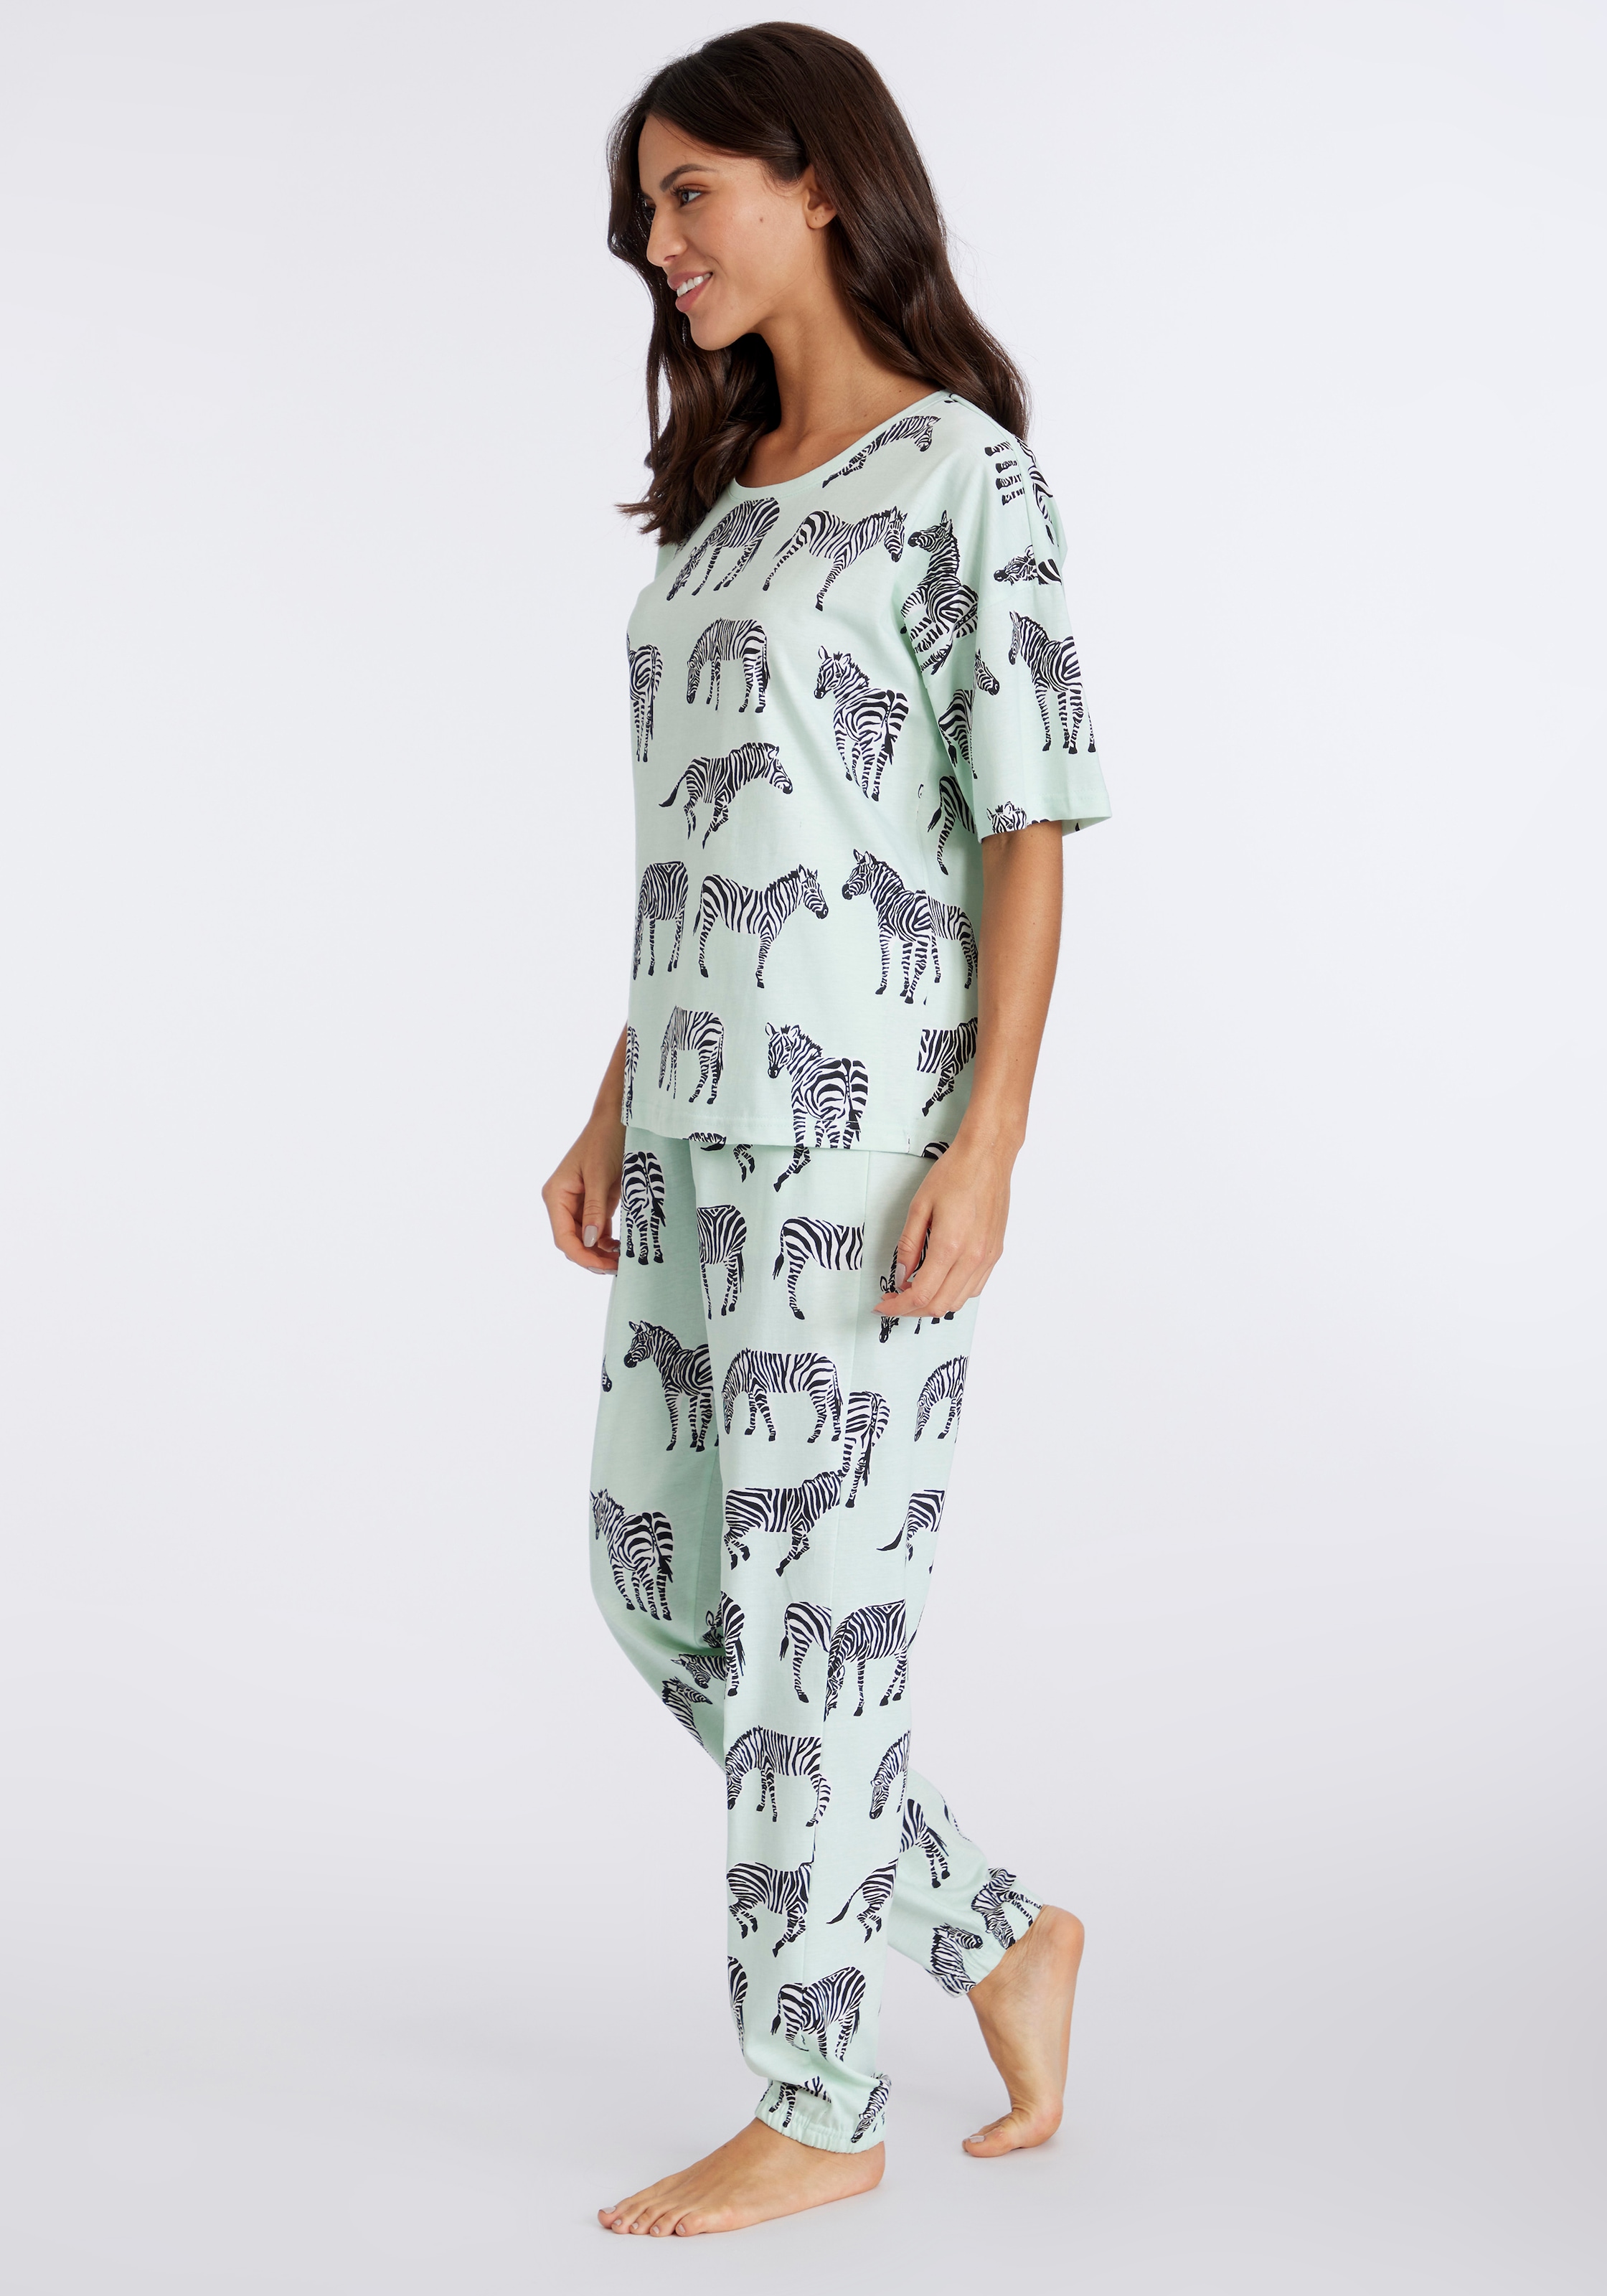 Vivance Dreams Pyjama, (2 Animal Alloverprint tlg.), online kaufen mt